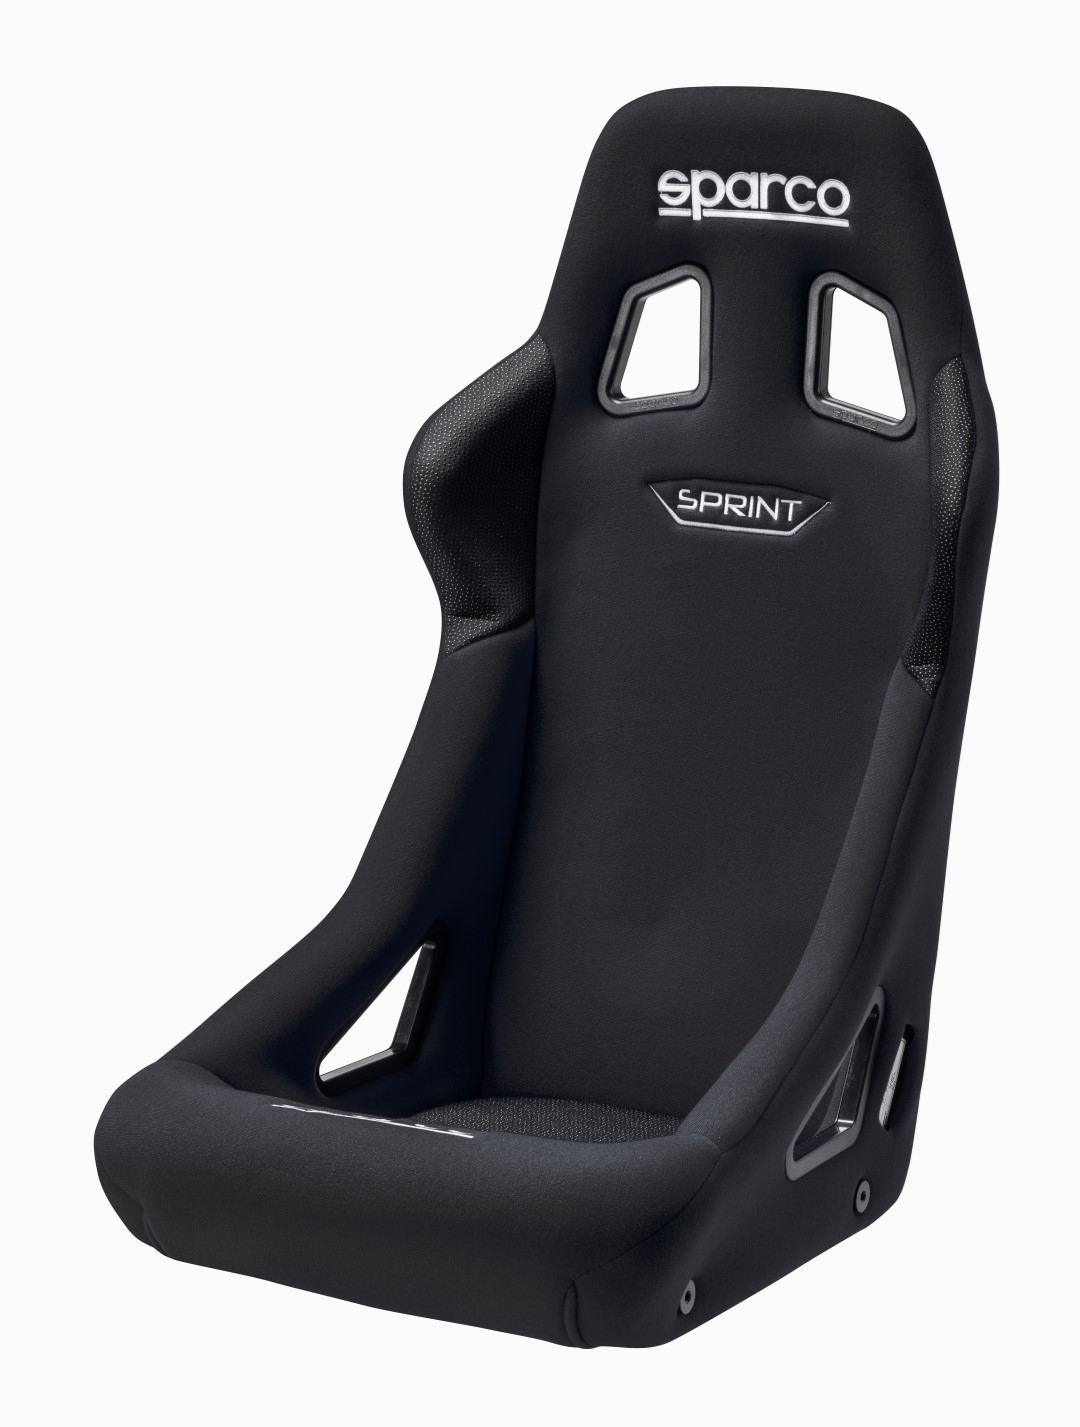 Sparco Sprint Seat (Black)